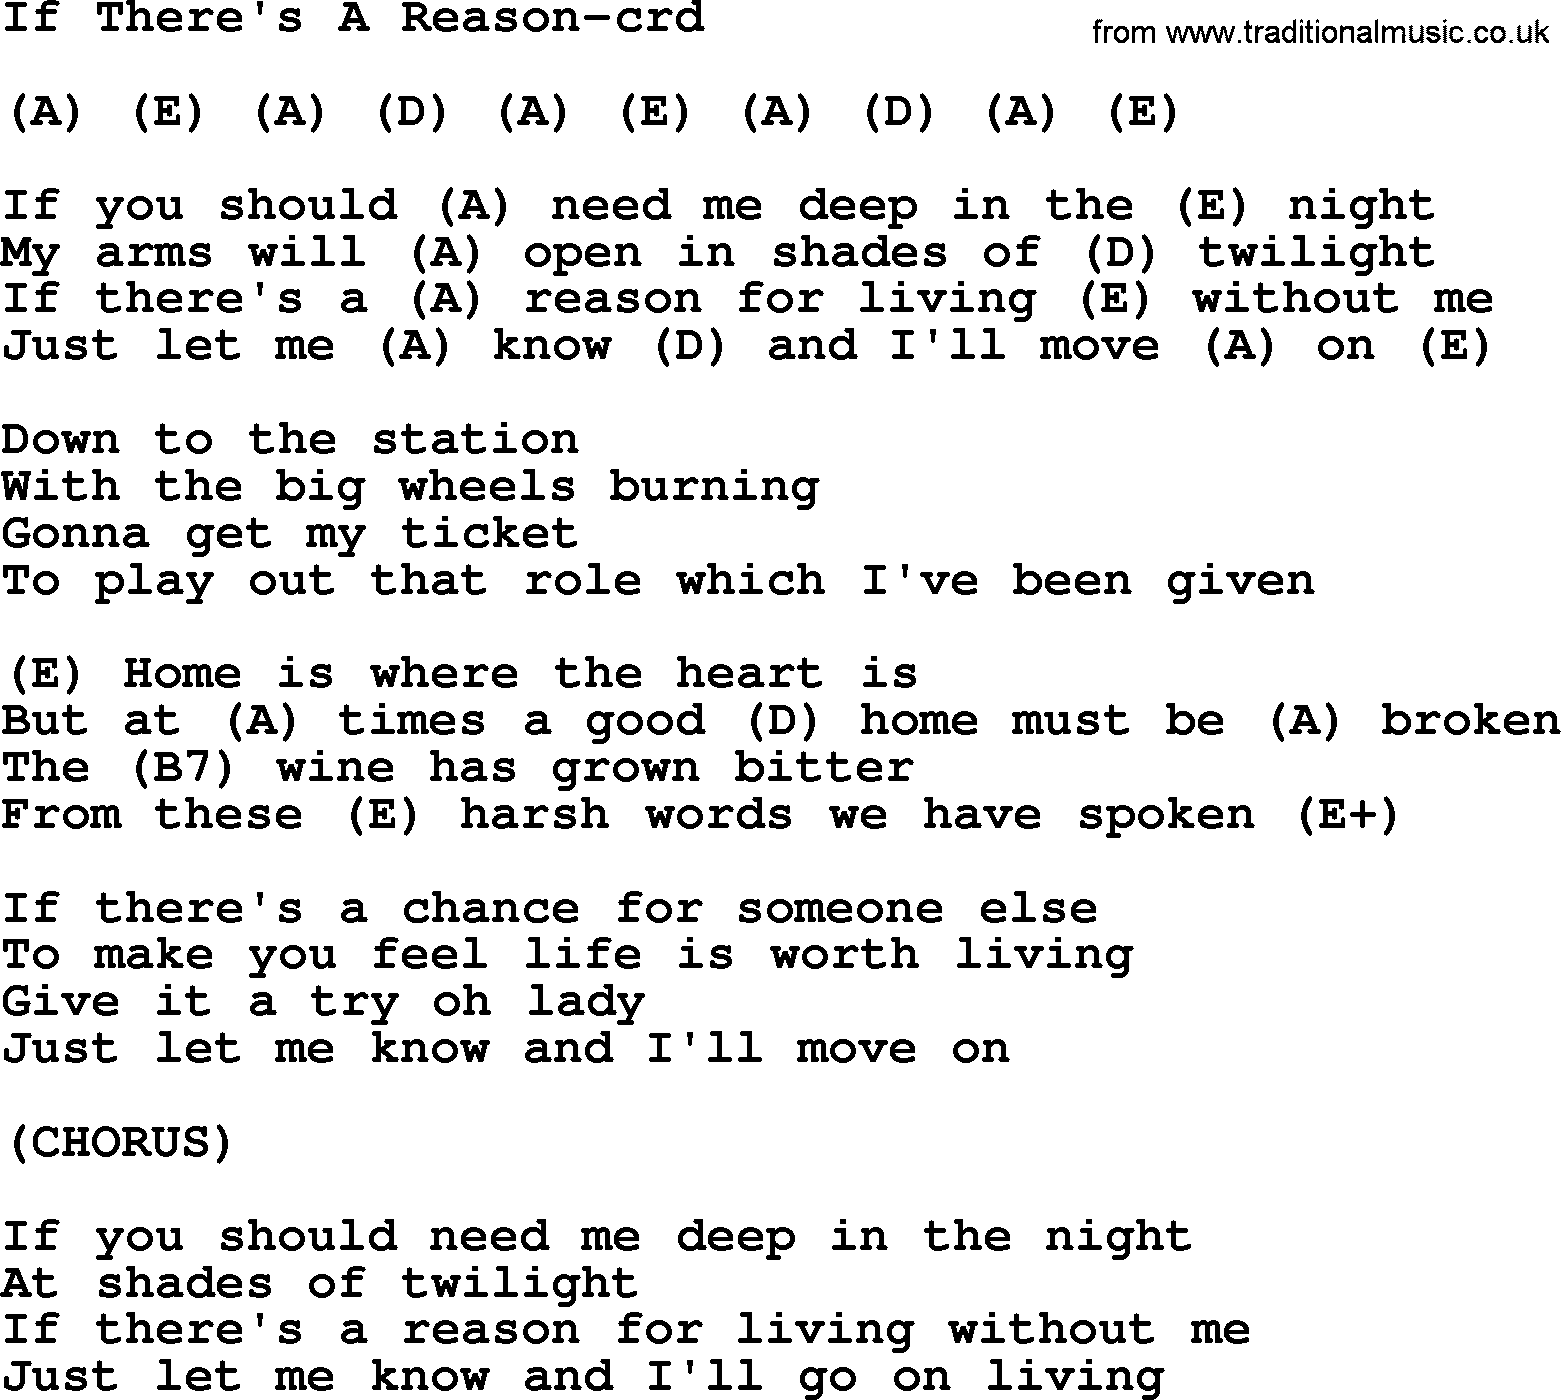 Gordon Lightfoot song If There's A Reason, lyrics and chords